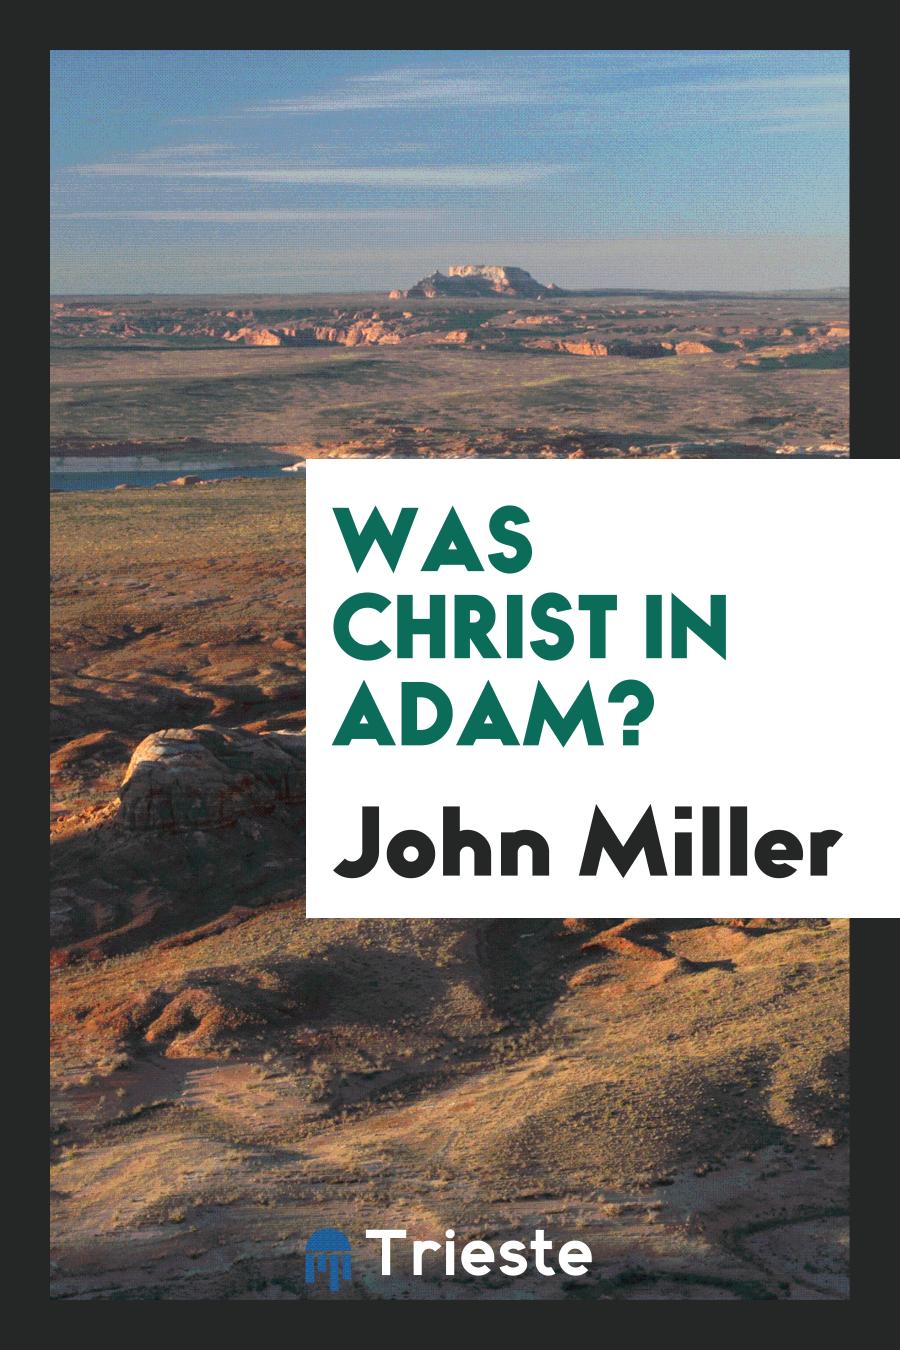 Was Christ in Adam?